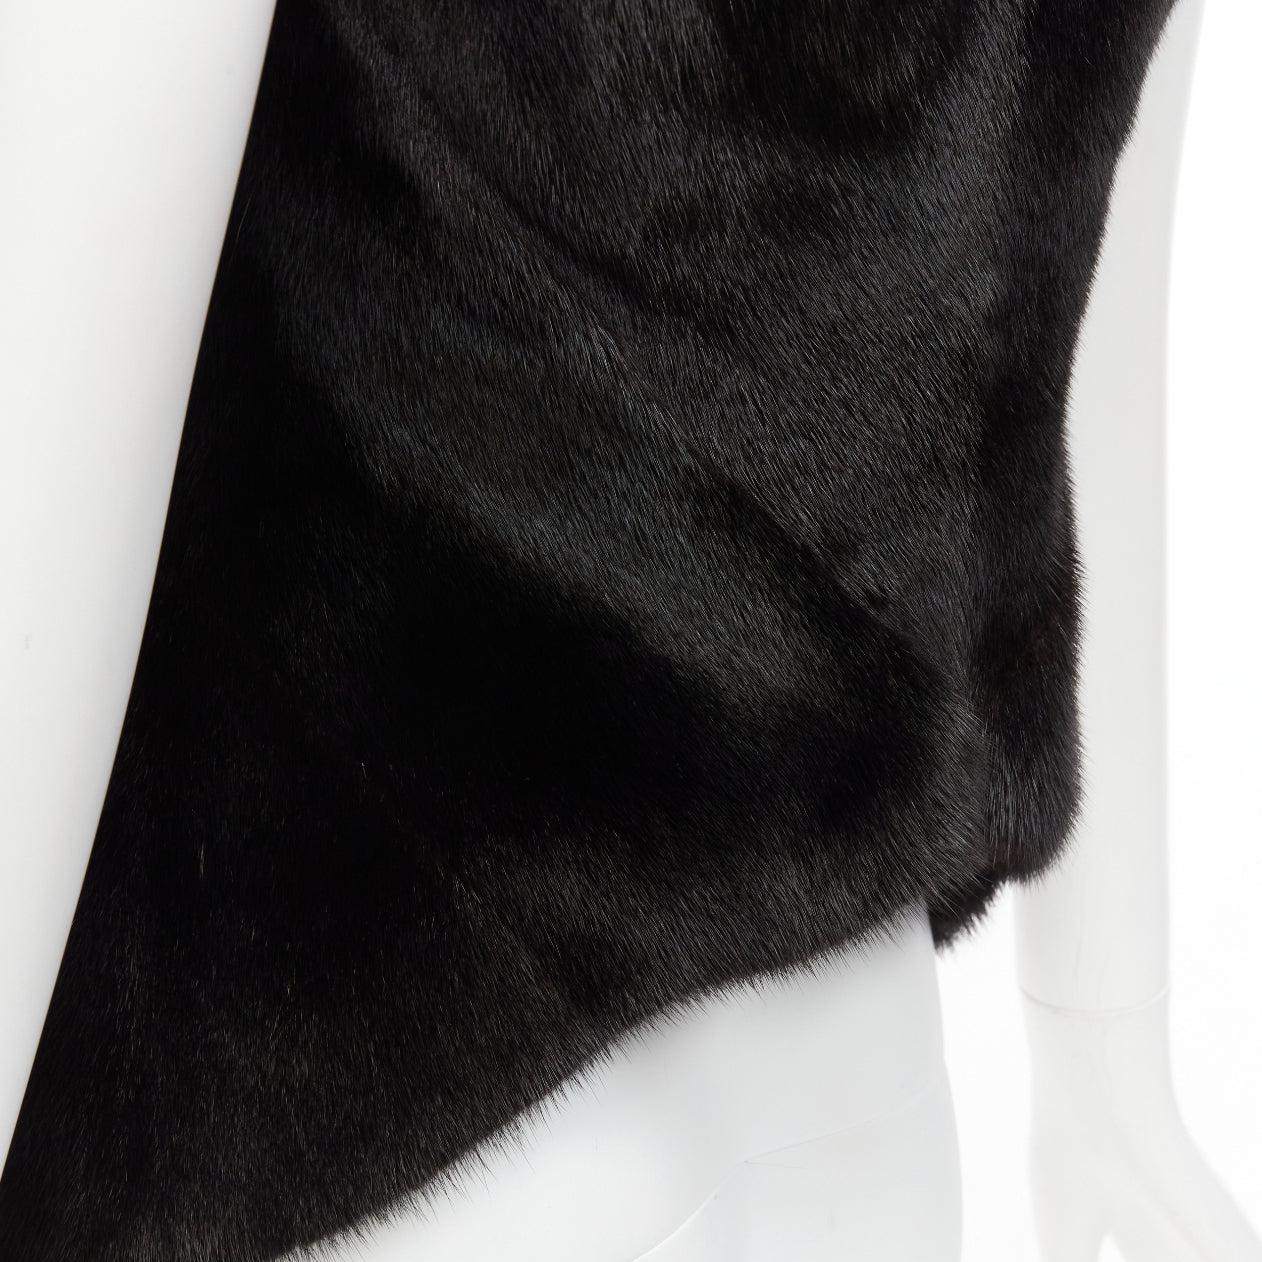 rare RICK OWENS Palais Royale black mixed fur asymmetric zipper vest top jacket
Reference: NILI/A00016
Brand: Rick Owens
Designer: Rick Owens
Collection: Palais Royale
Material: Fur
Color: Black
Pattern: Solid
Closure: Zip
Lining: Brown